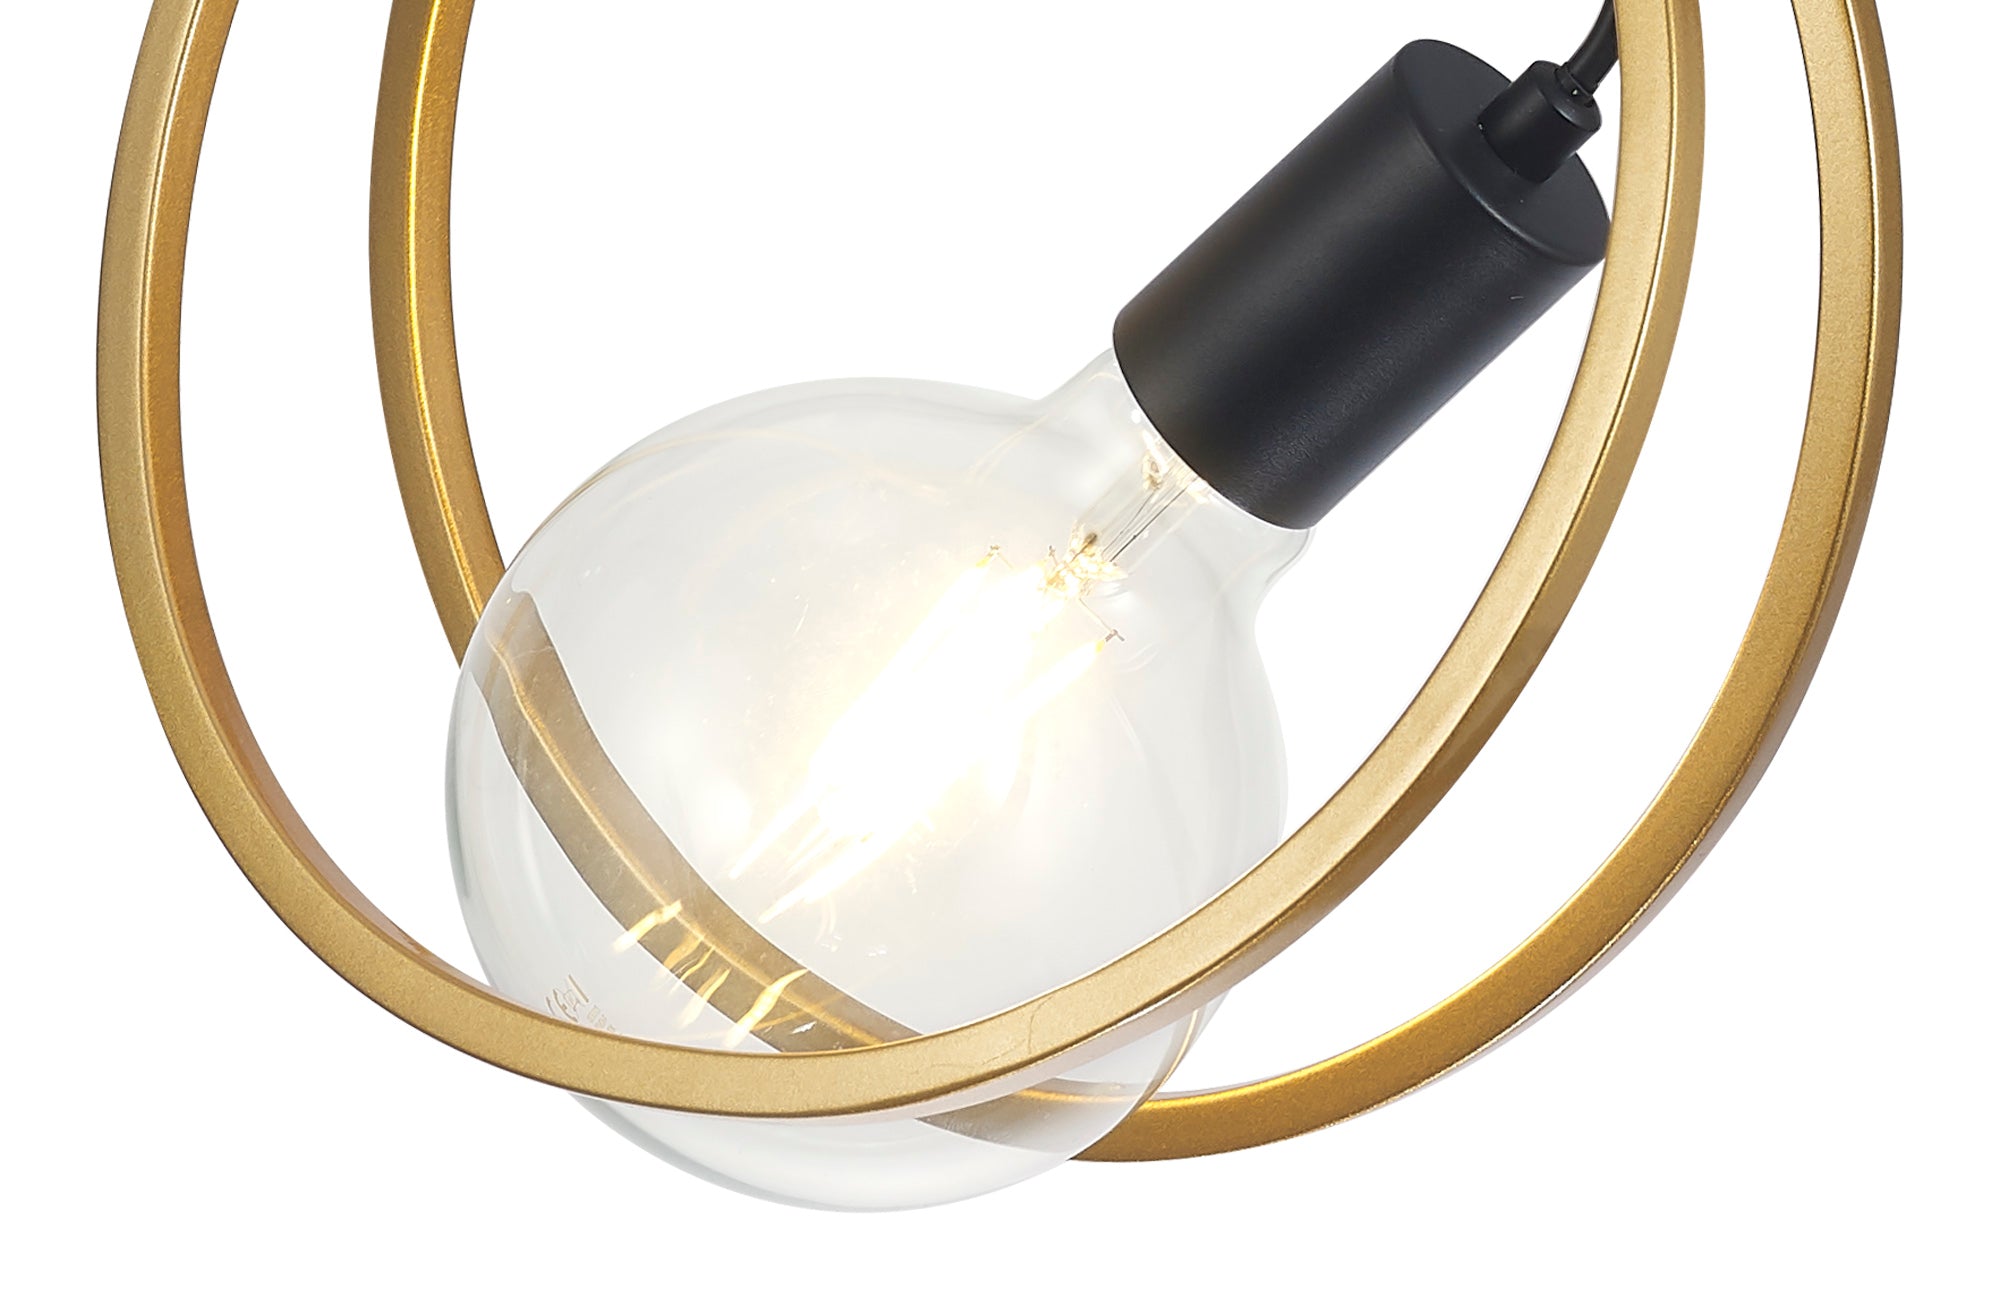 Corfu Double Ring Pendant Light, 1 Light E27, Matt Black  &  Painted Gold, G95 & 120 Lamp Recommended